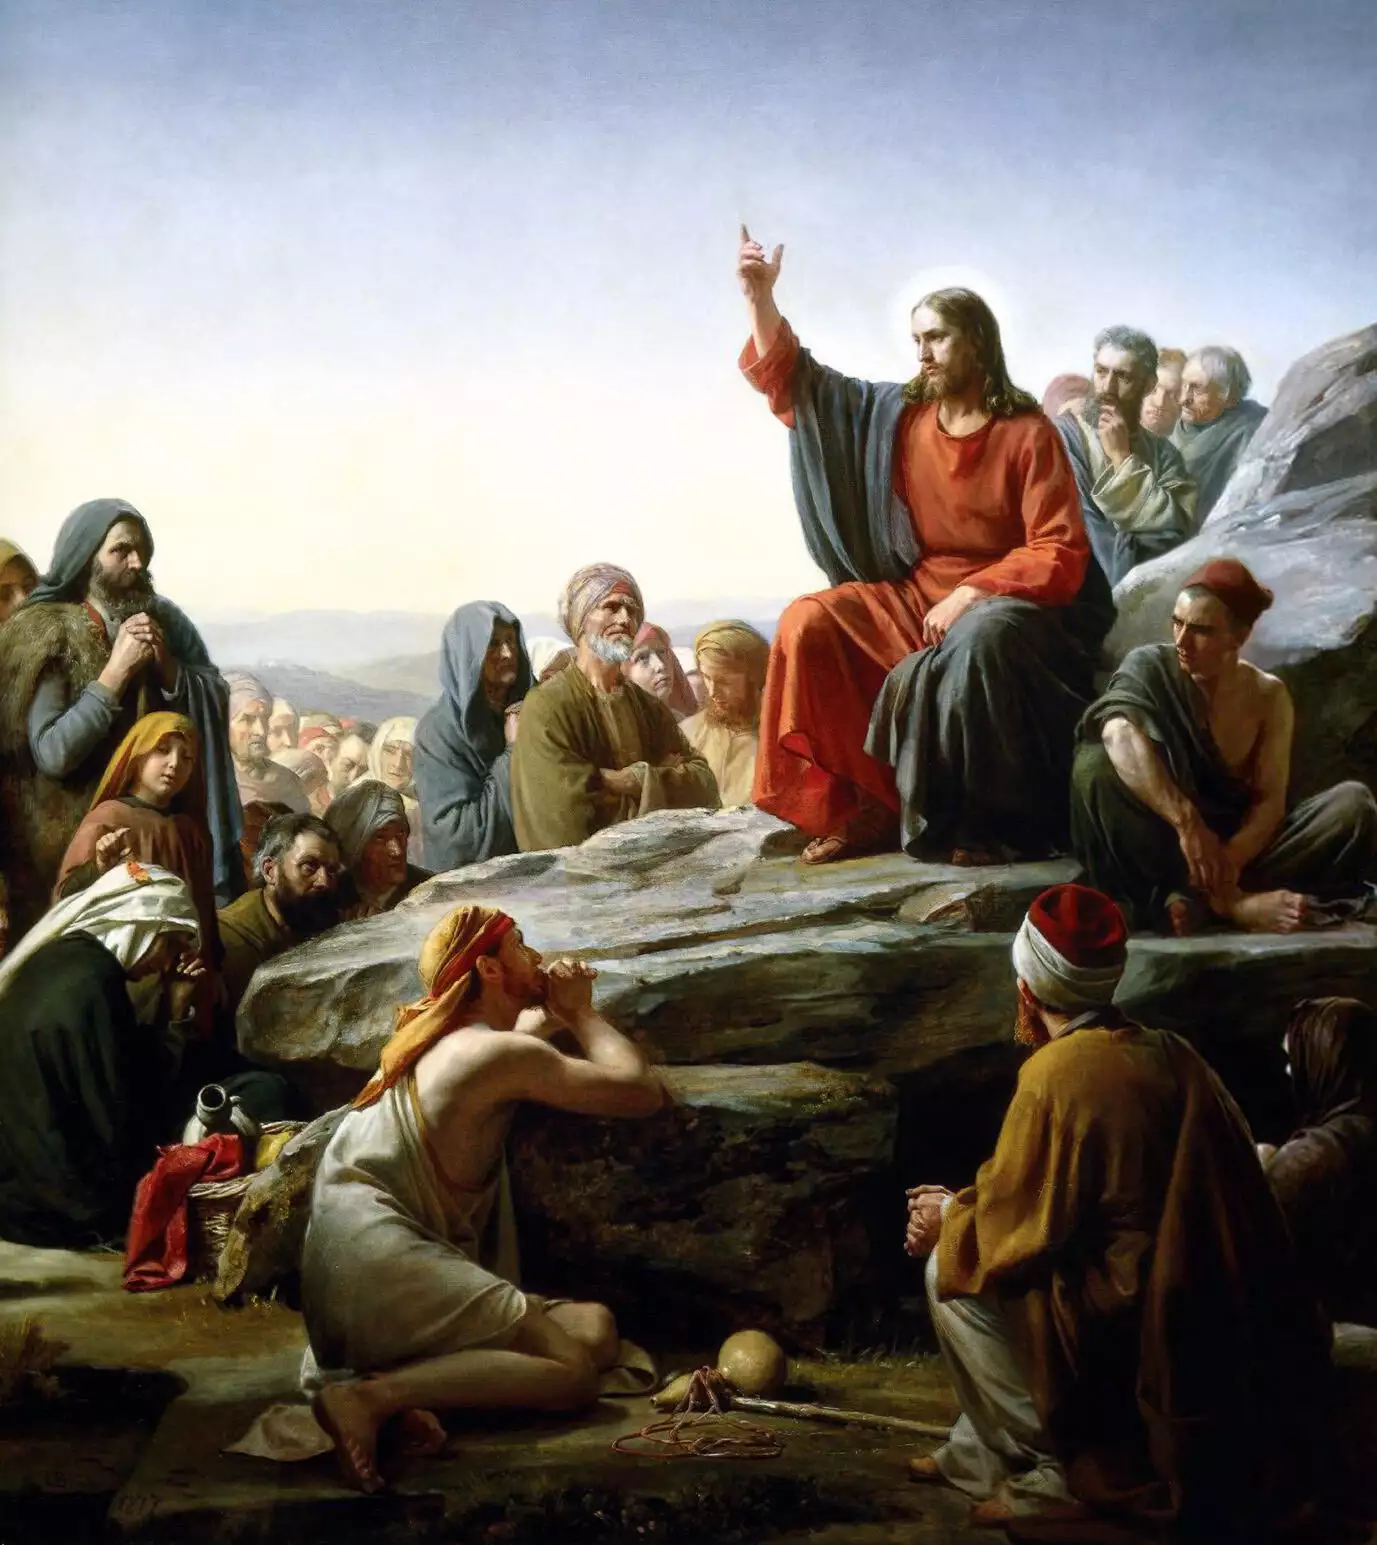 Sermon On The Mount, by Carl Bloch